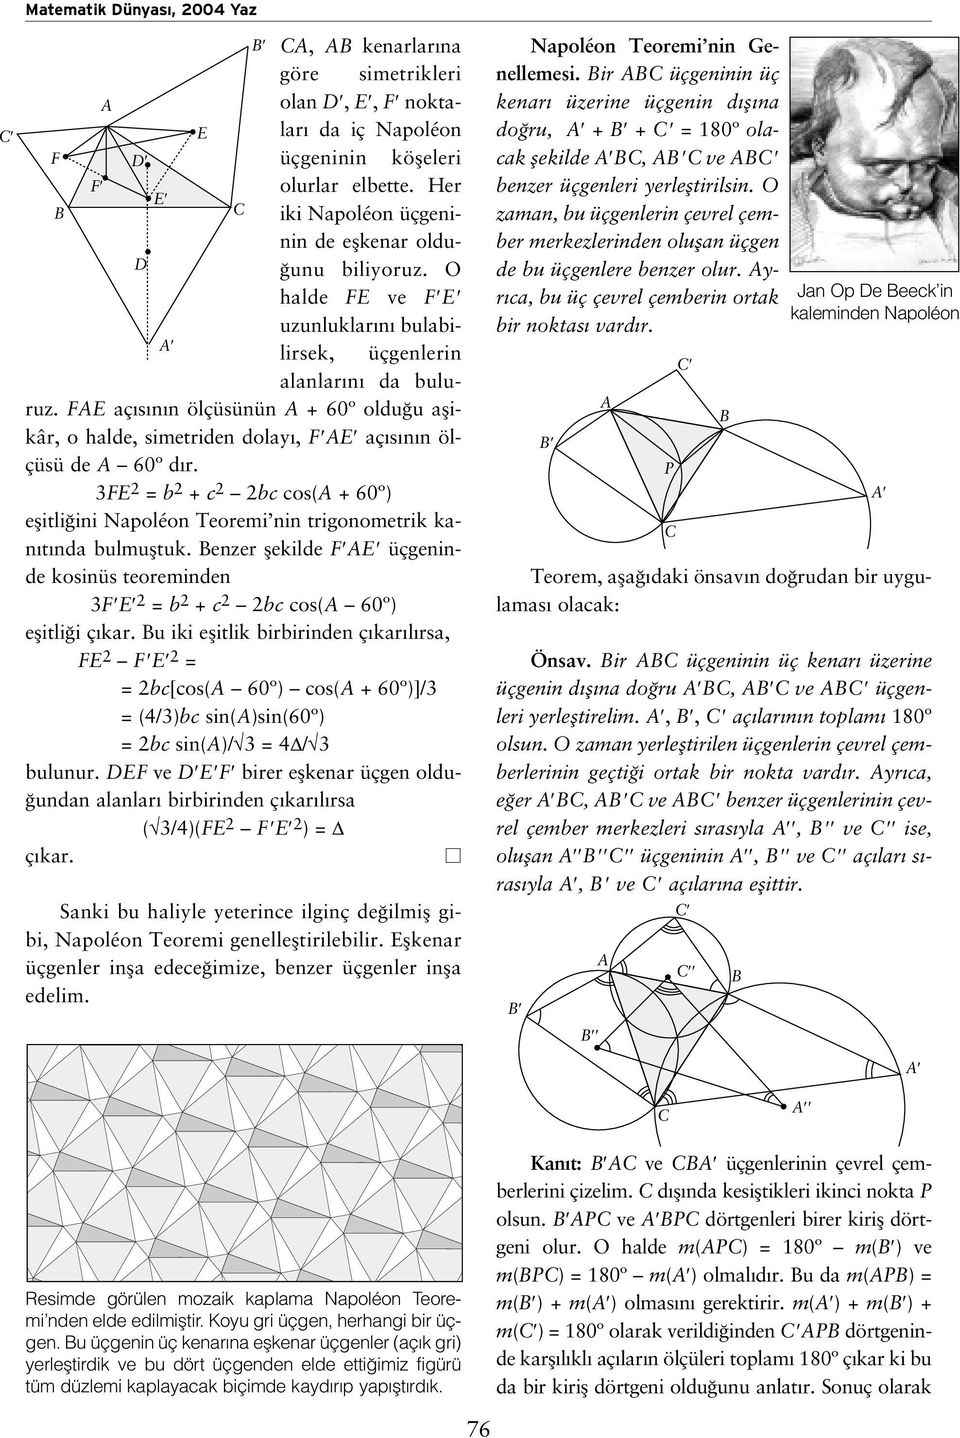 3 2 = 2 + 2 2 os( + 60º) eflitli ini Npoléon Teoremi nin trigonometrik kn t nd ulmufltuk. enzer flekilde üçgeninde kosinüs teoreminden 3 2 = 2 + 2 2 os( 60º) eflitli i ç kr.